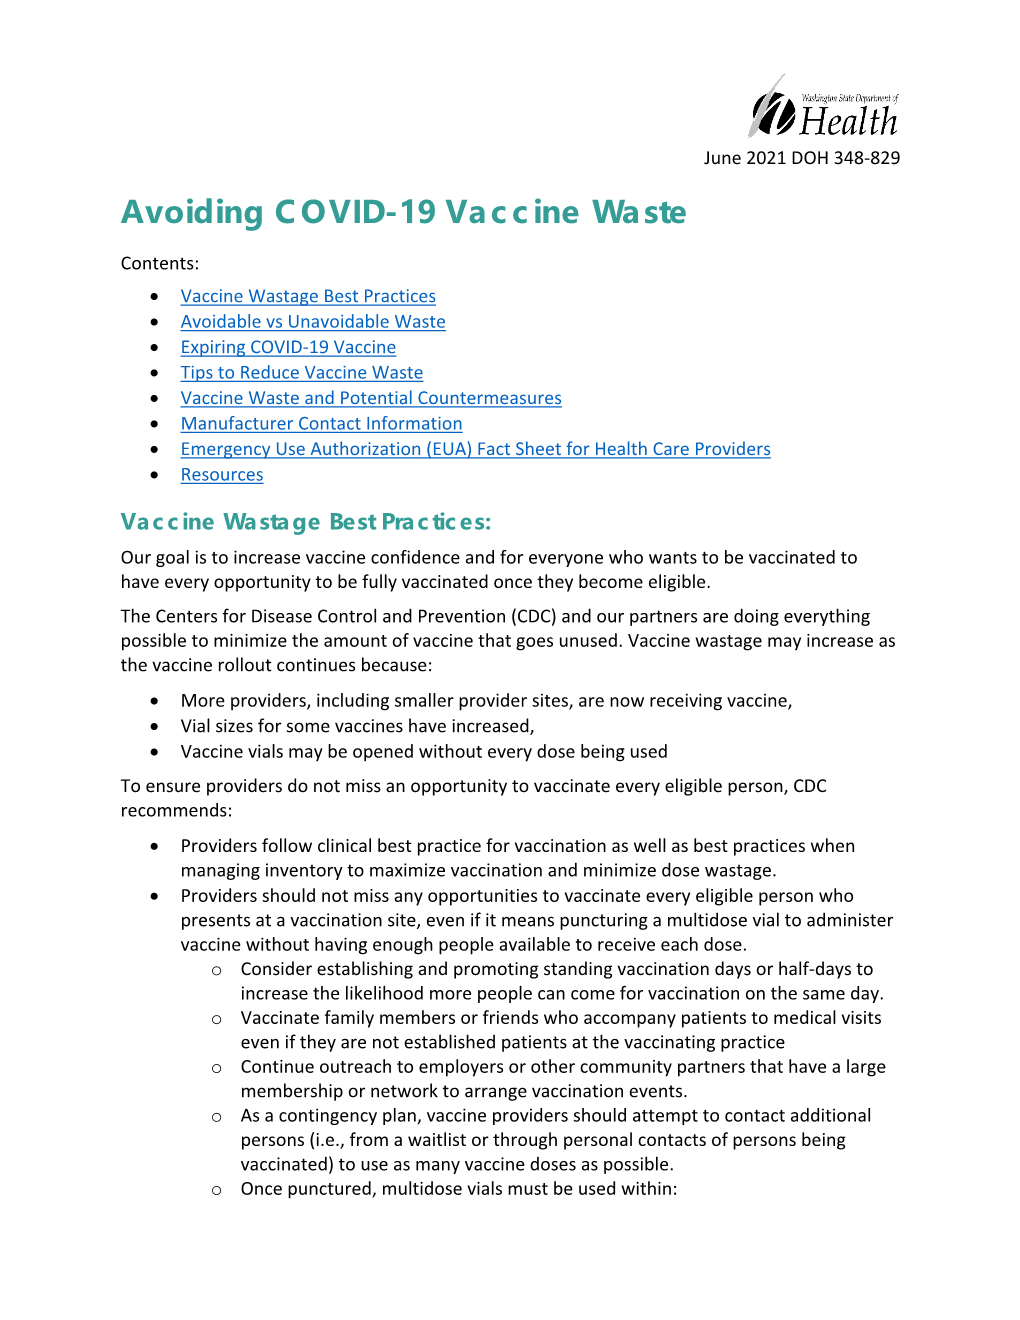 Avoiding COVID-19 Vaccine Waste (PDF)